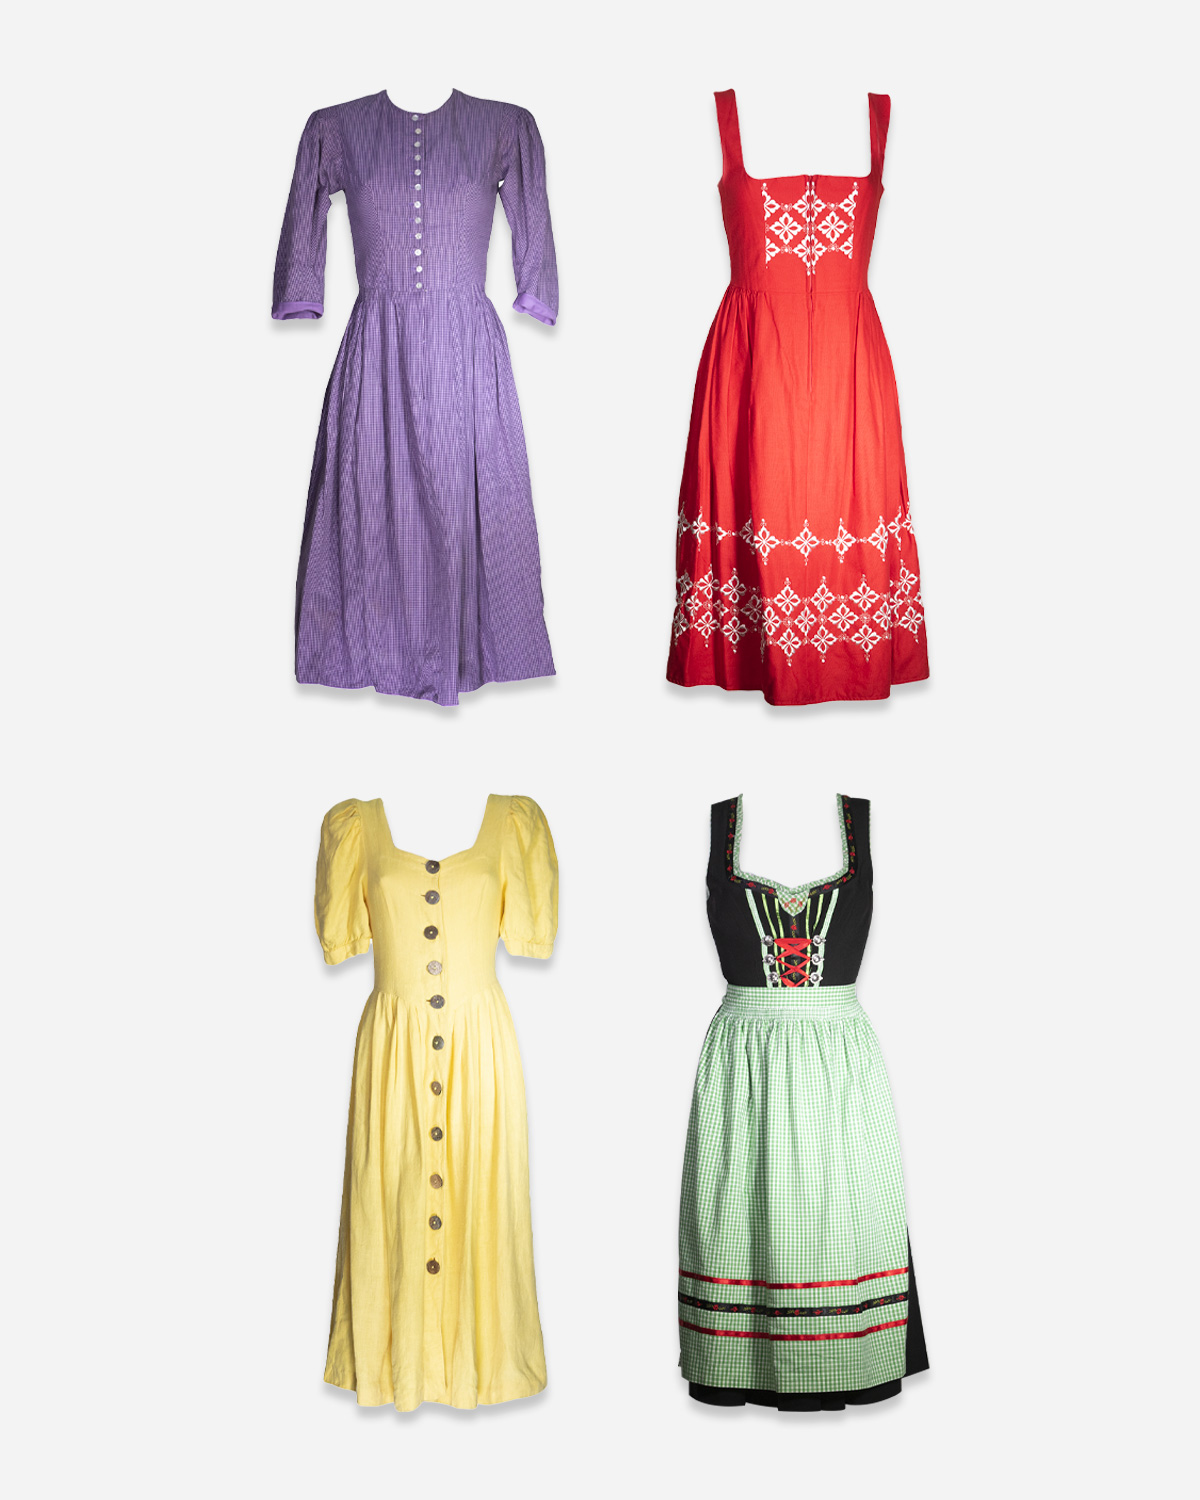 Tyrolean dresses